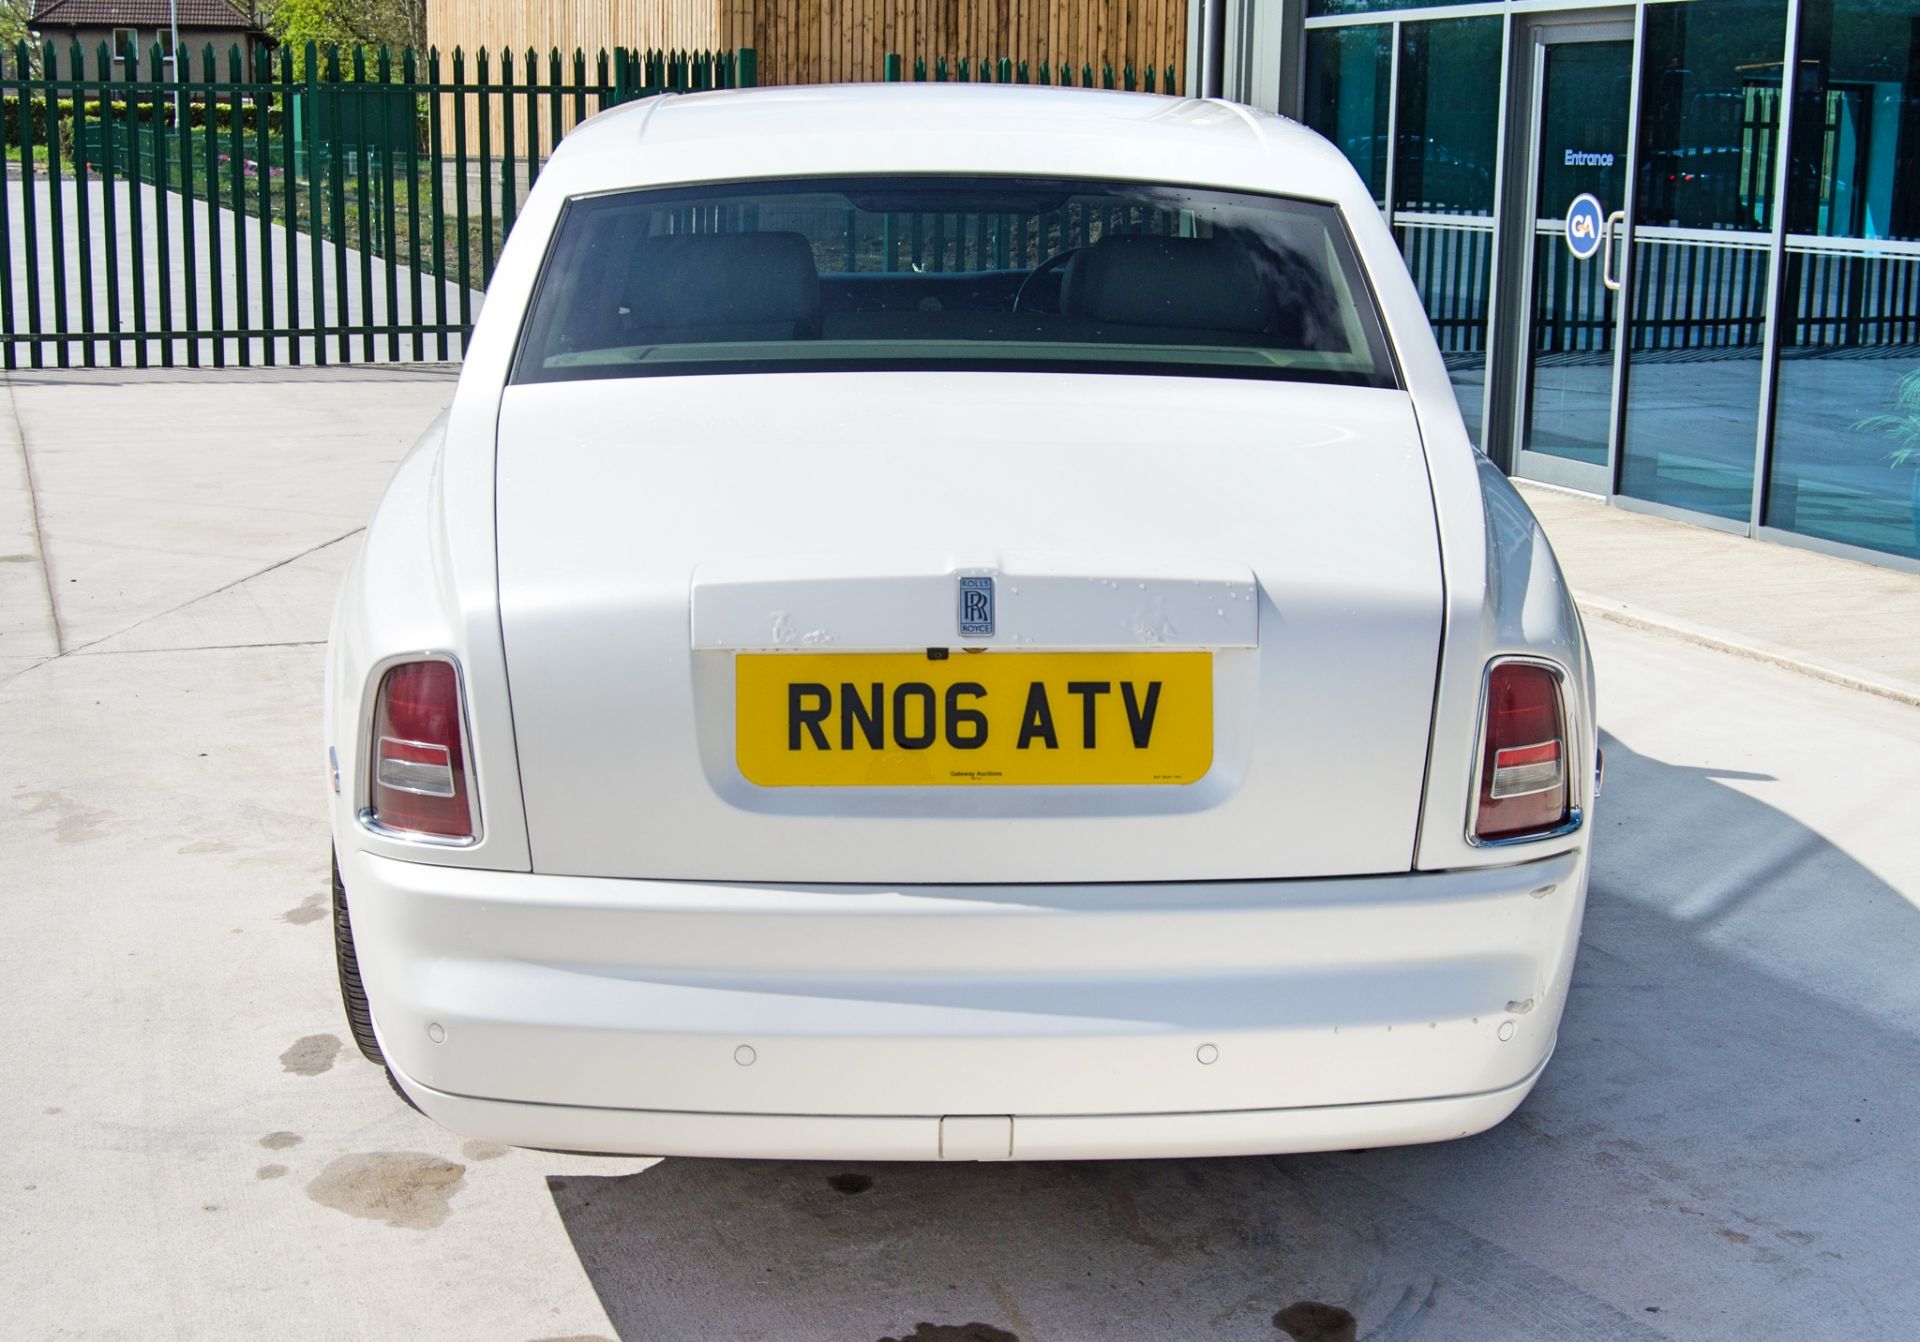 Rolls Royce Phantom 6749cc V12 Auto 4 door saloon car Registration Number: RN06 ATV Date of - Image 12 of 52